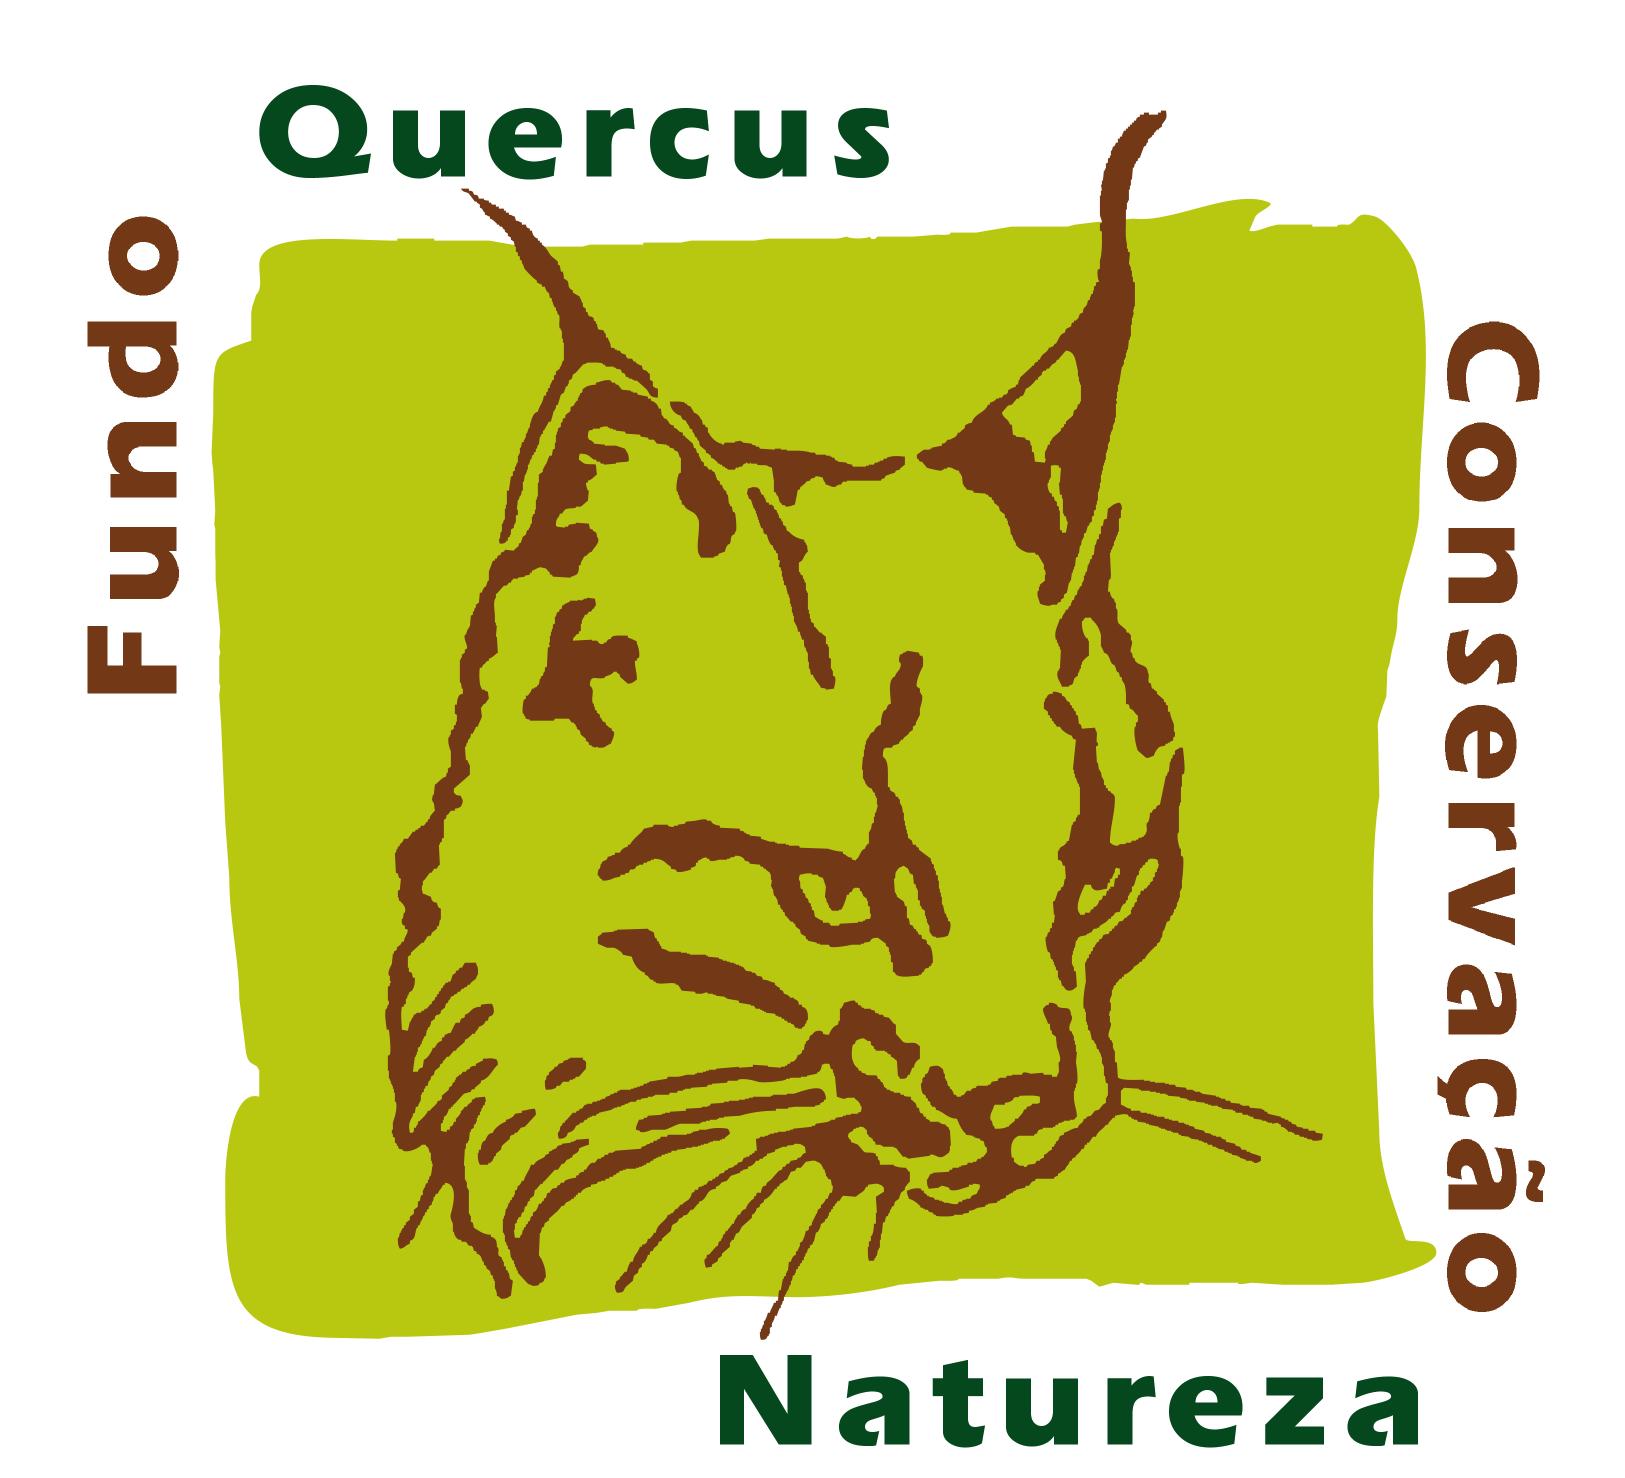 Logo FCN